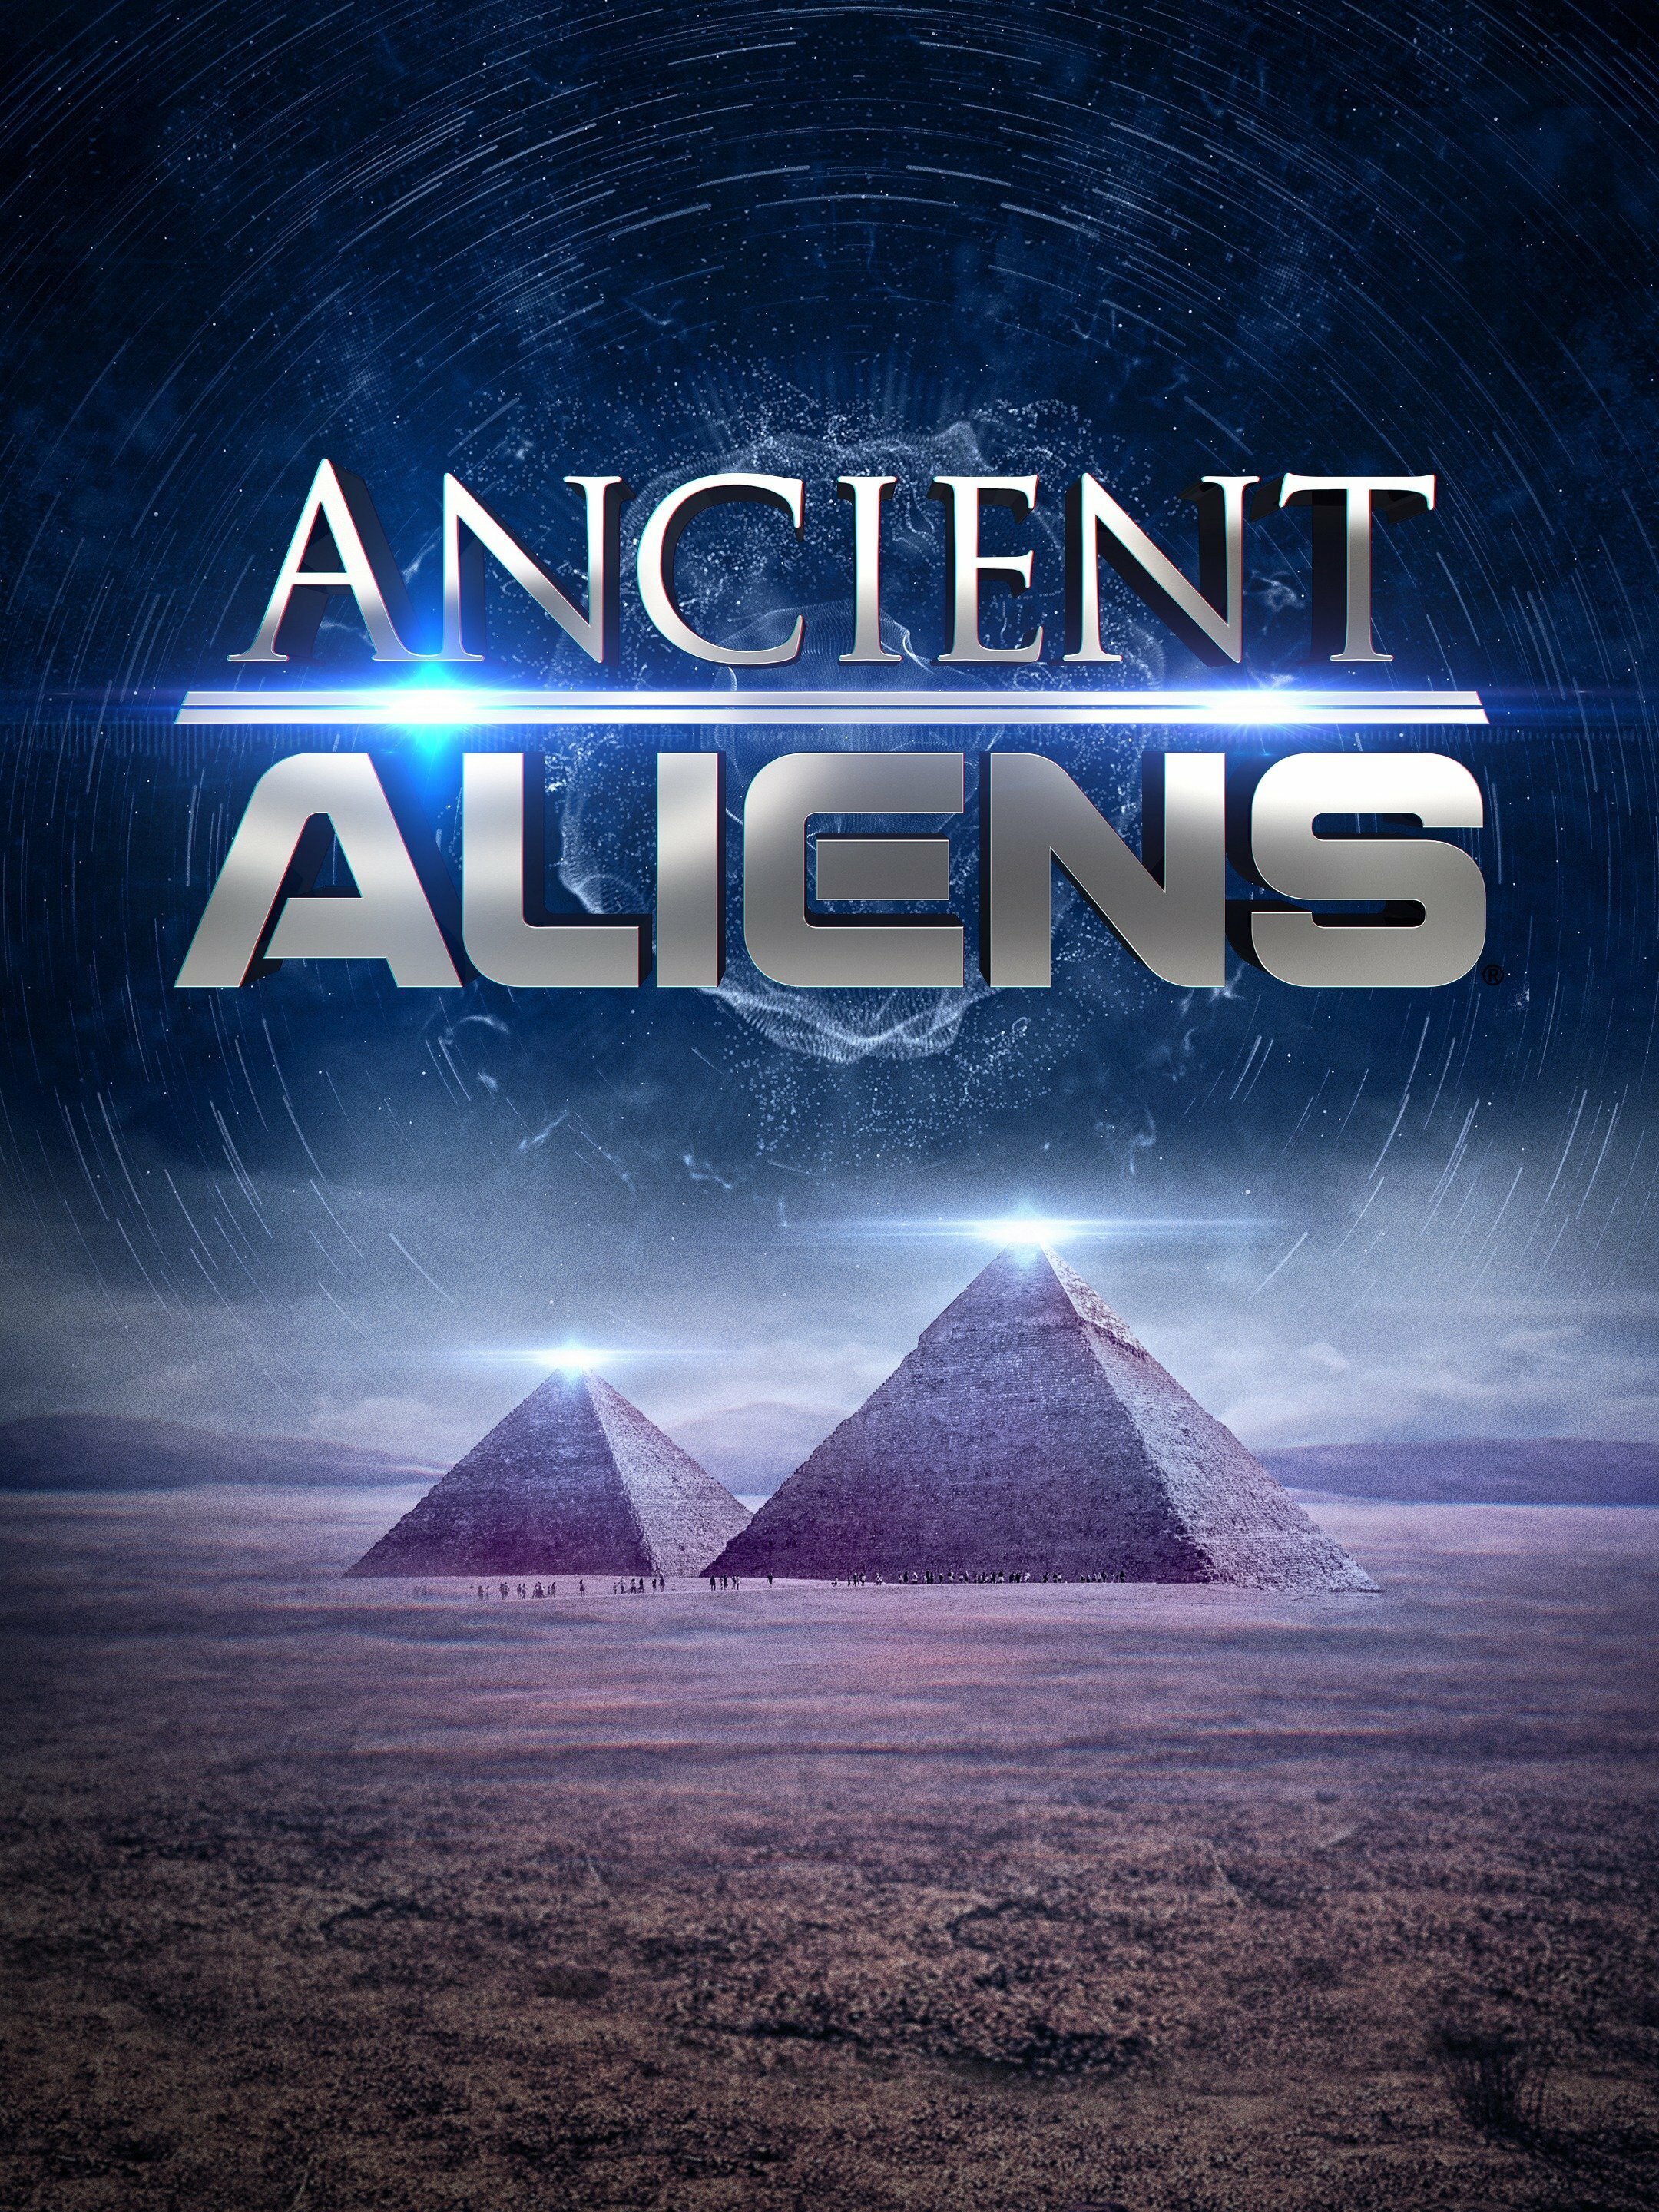 Ancient aliens season 1 episode 4 stashokwin